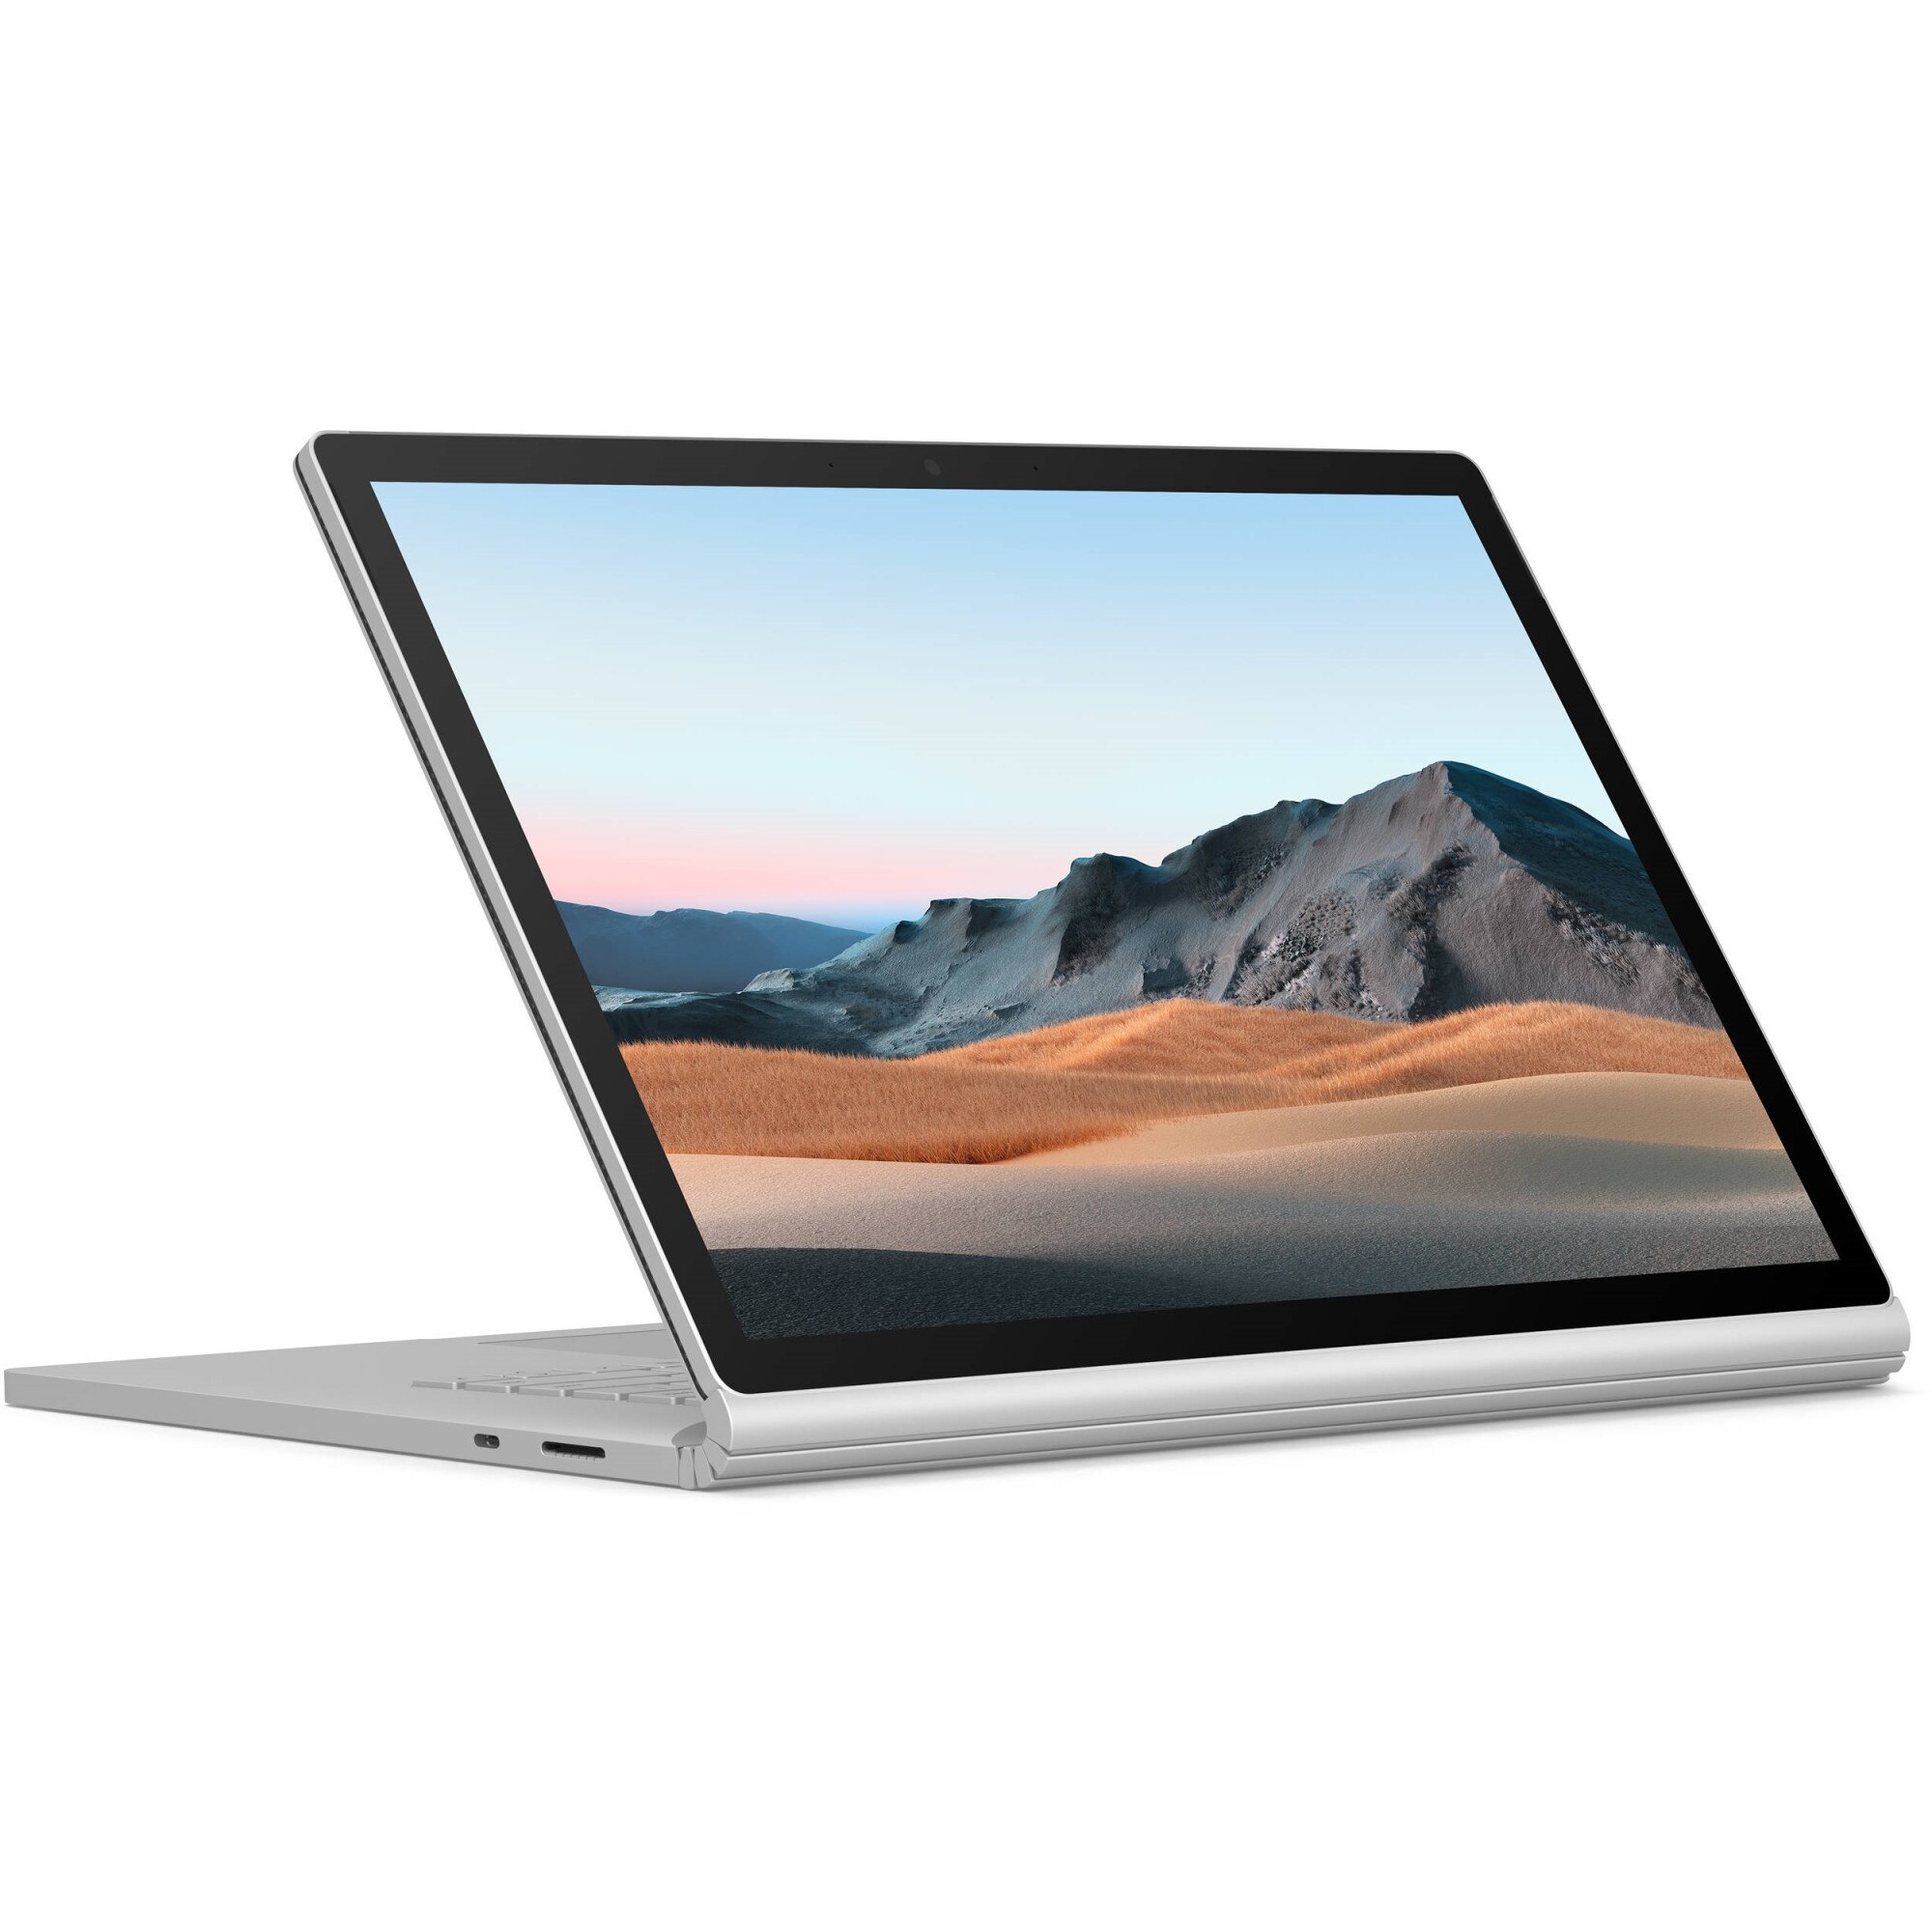 Laptop Microsoft Surface Book 3 S Intel Core I7 1065g7 1 30 3 90 Ghz 8m 32 Gb 512gb M 2 Ssd Nvidia Gtx 1650 4gb Gddr5 Windows 10 Home 64 Bit Srebrist Emag Bg